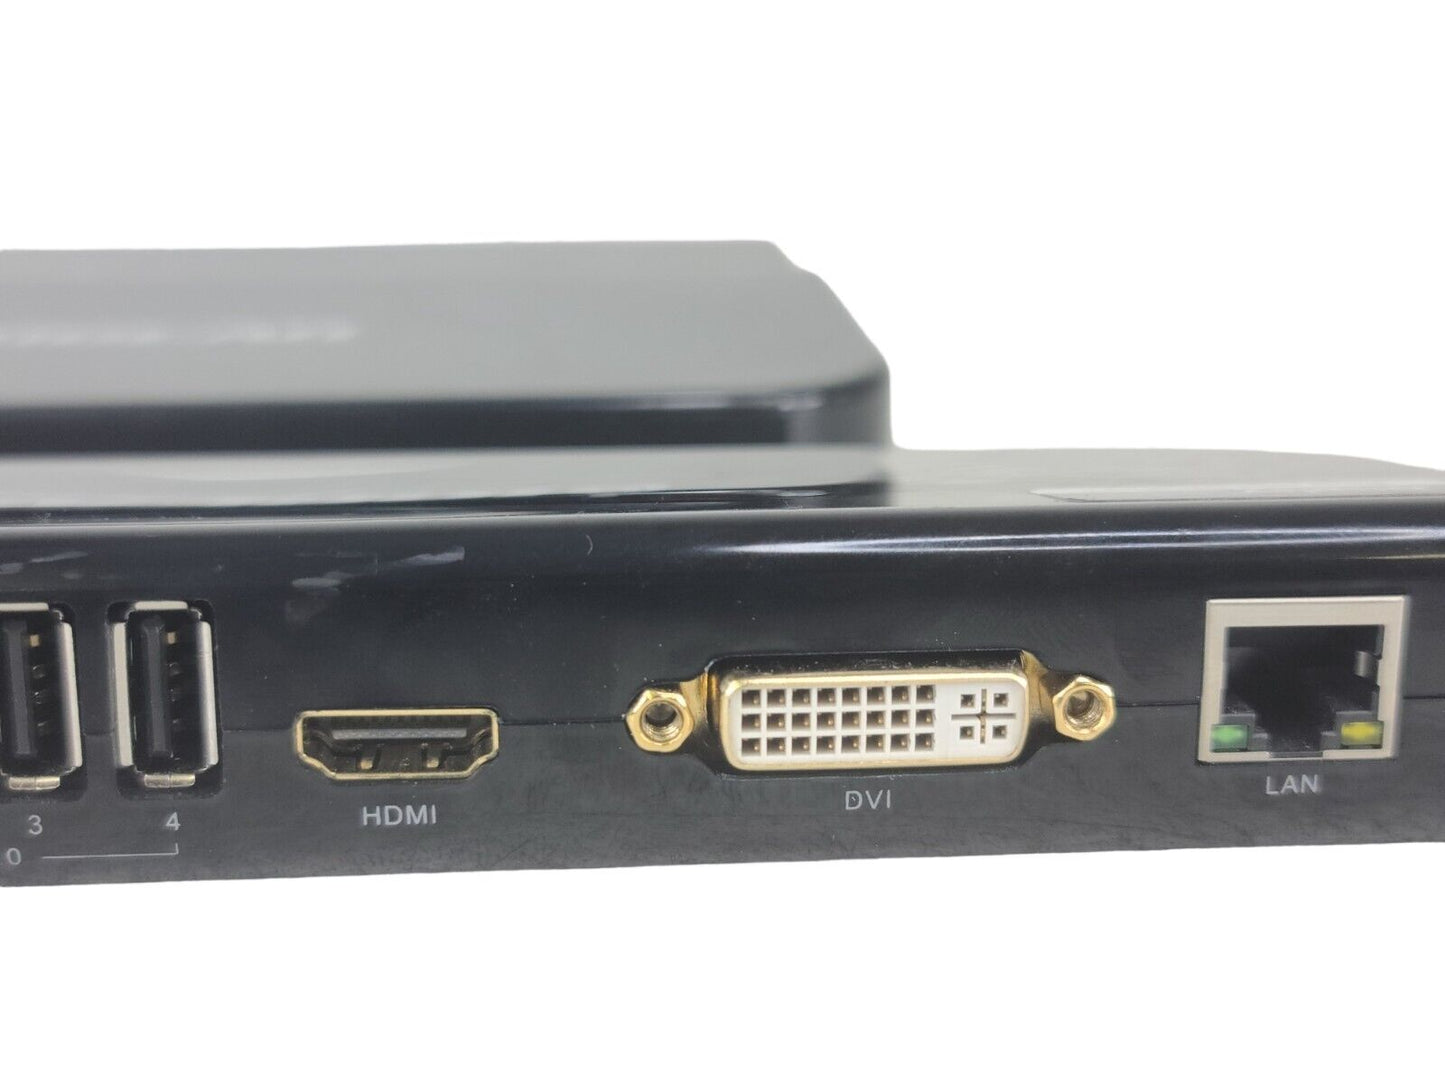 Lot of 3 IOGEAR GUD300 USB 3.0 Dual Video Docking Station No power supply